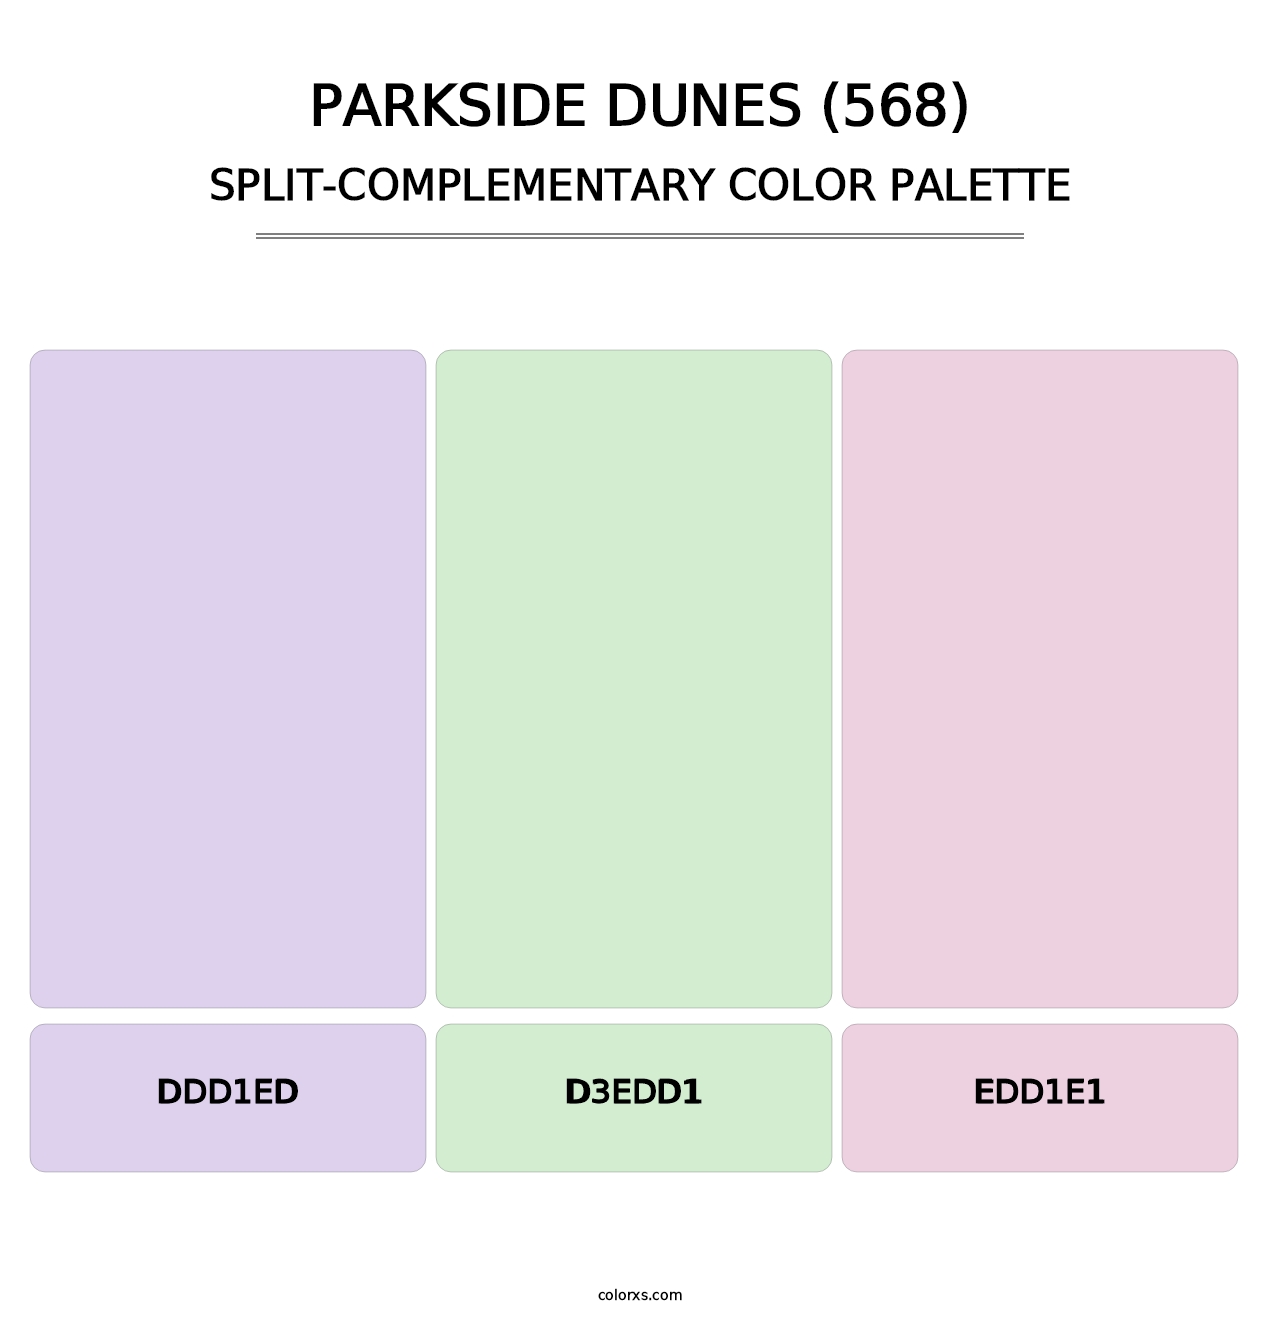 Parkside Dunes (568) - Split-Complementary Color Palette